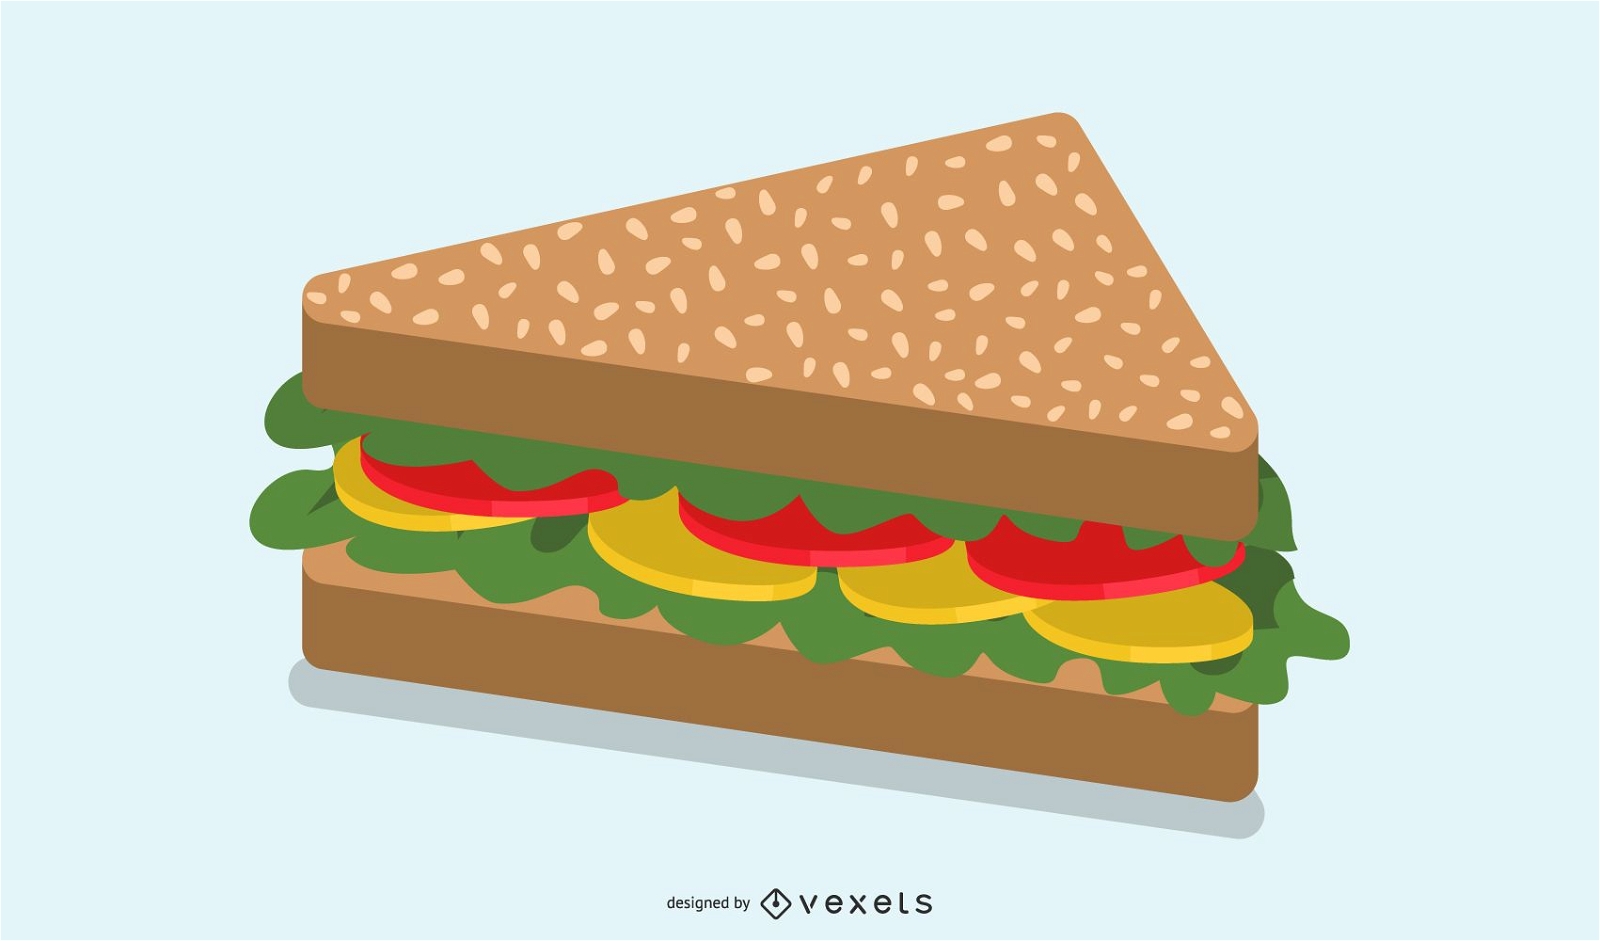 Sandwich snack illustration design